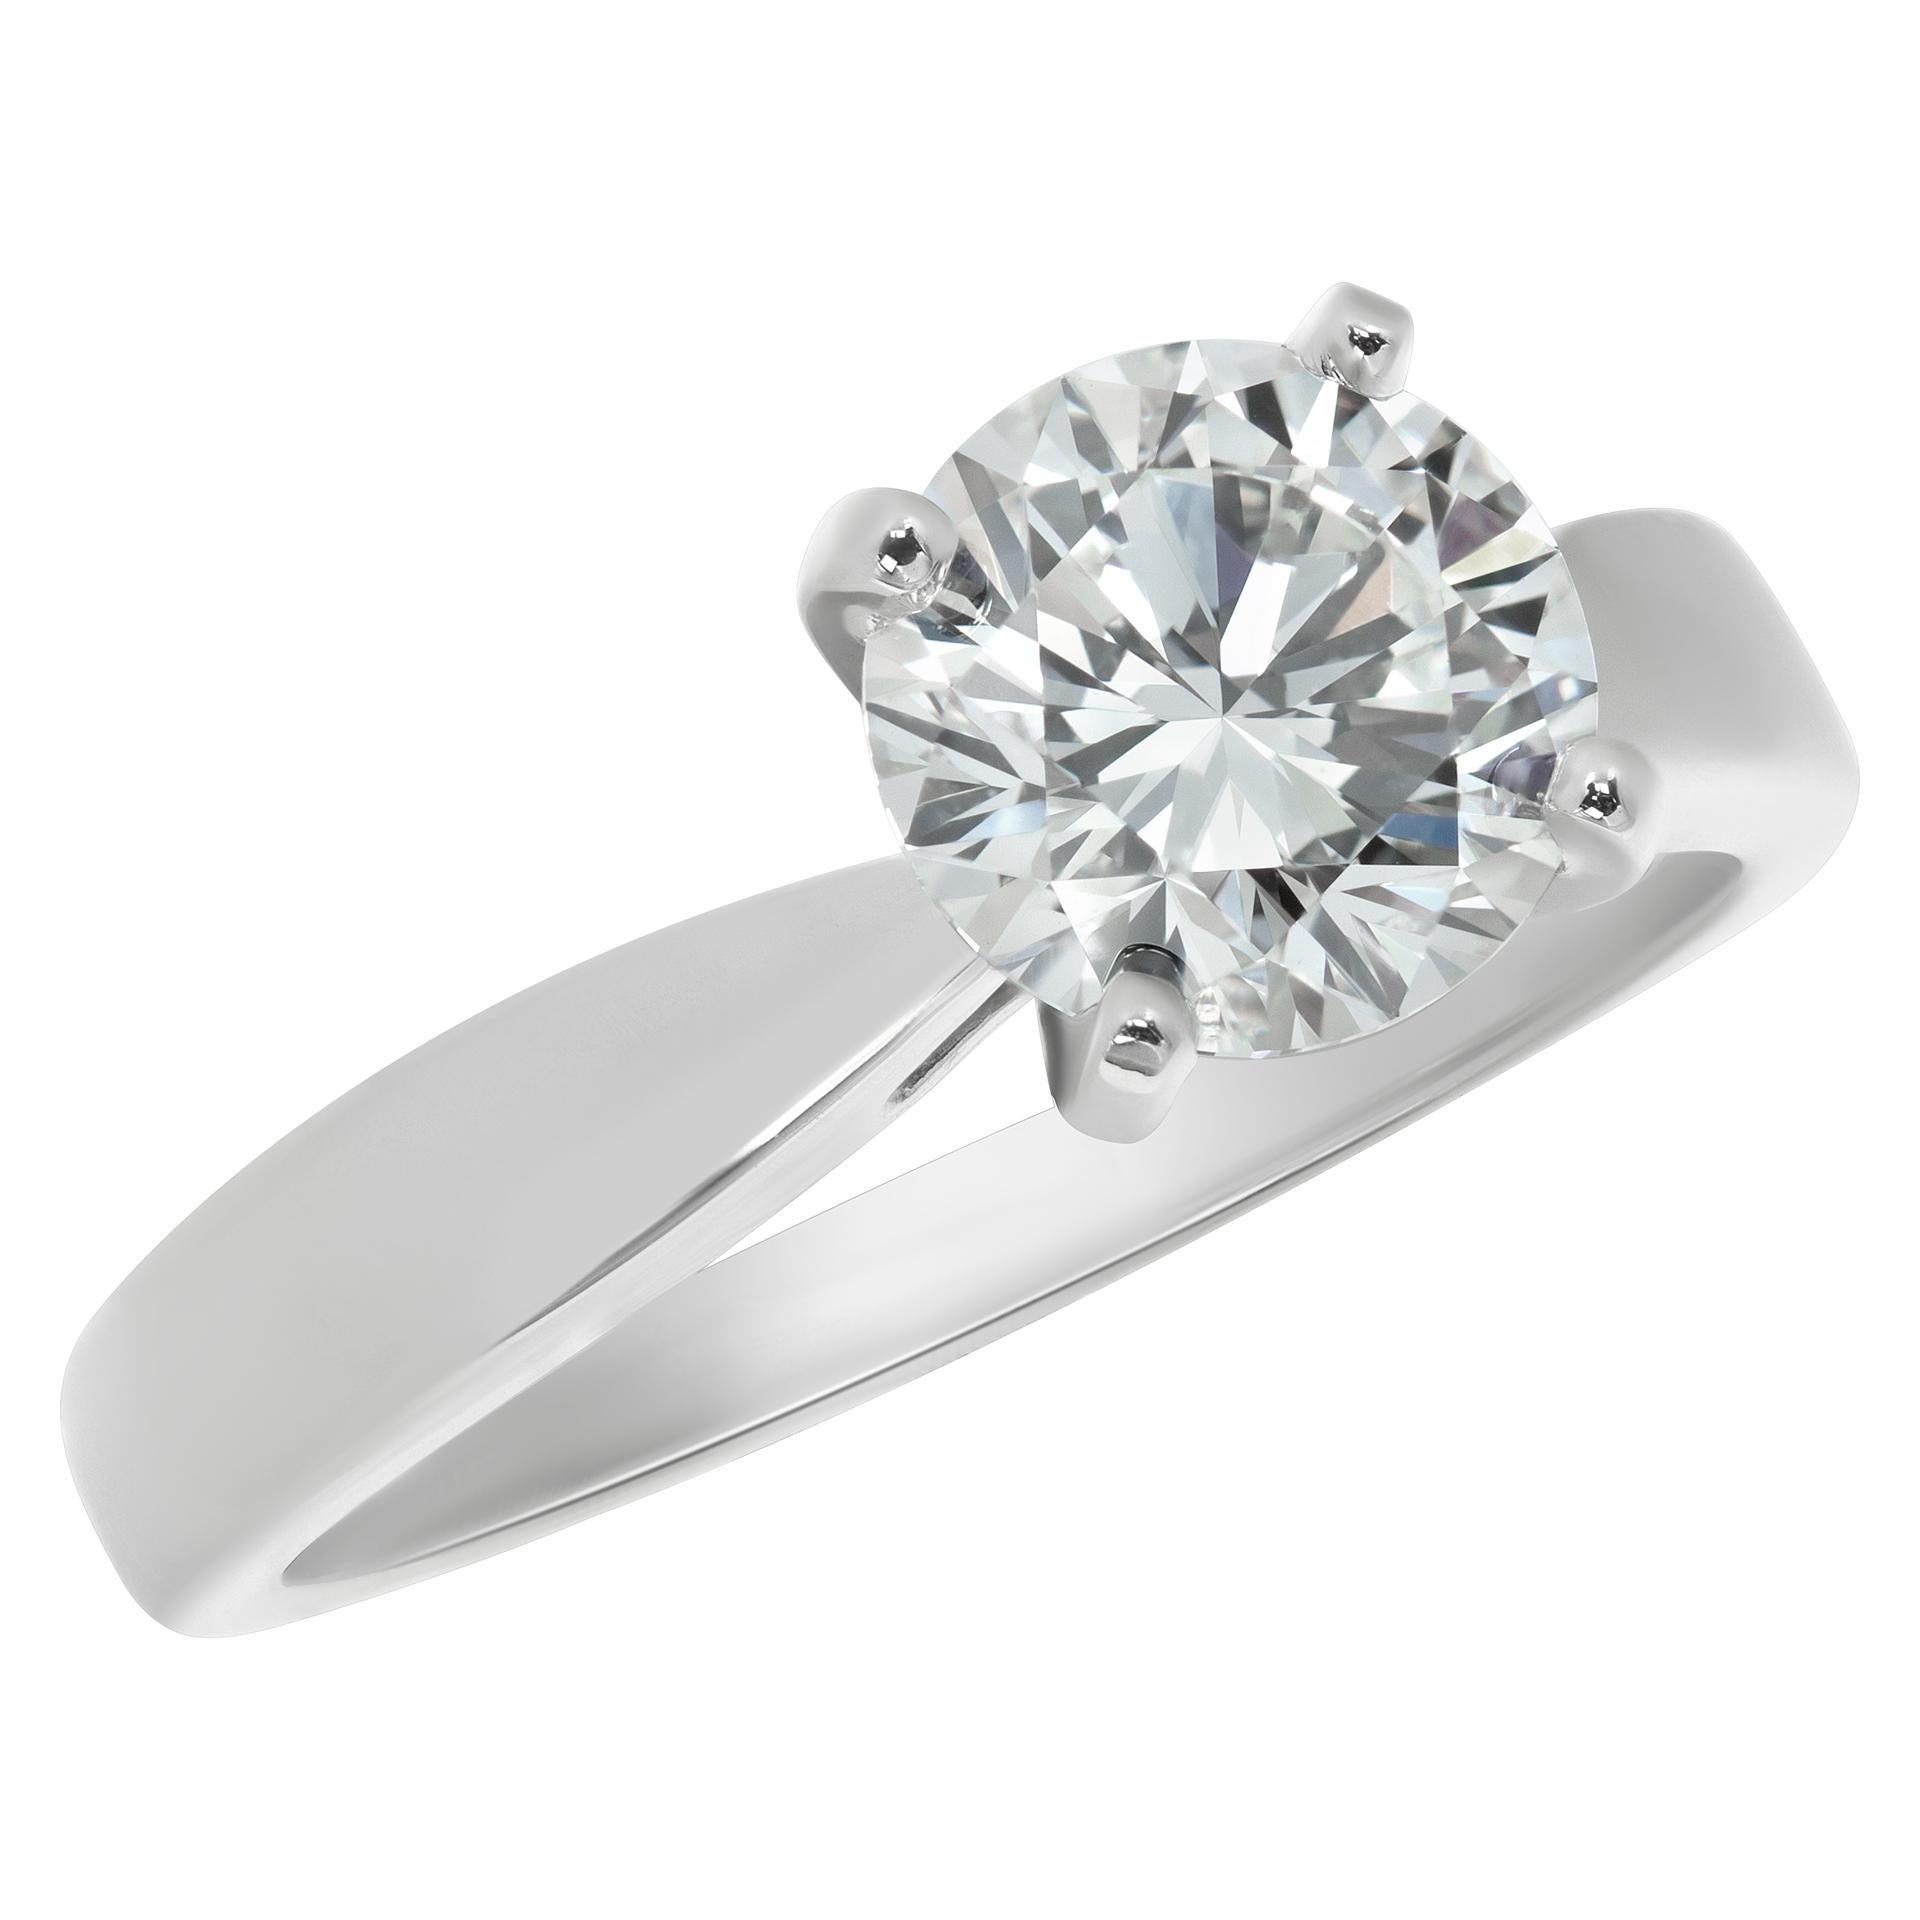 Brilliant Cut GIA certified round brilliant cut 1.78 carat diamond (I color, VS1 clarity) ring For Sale